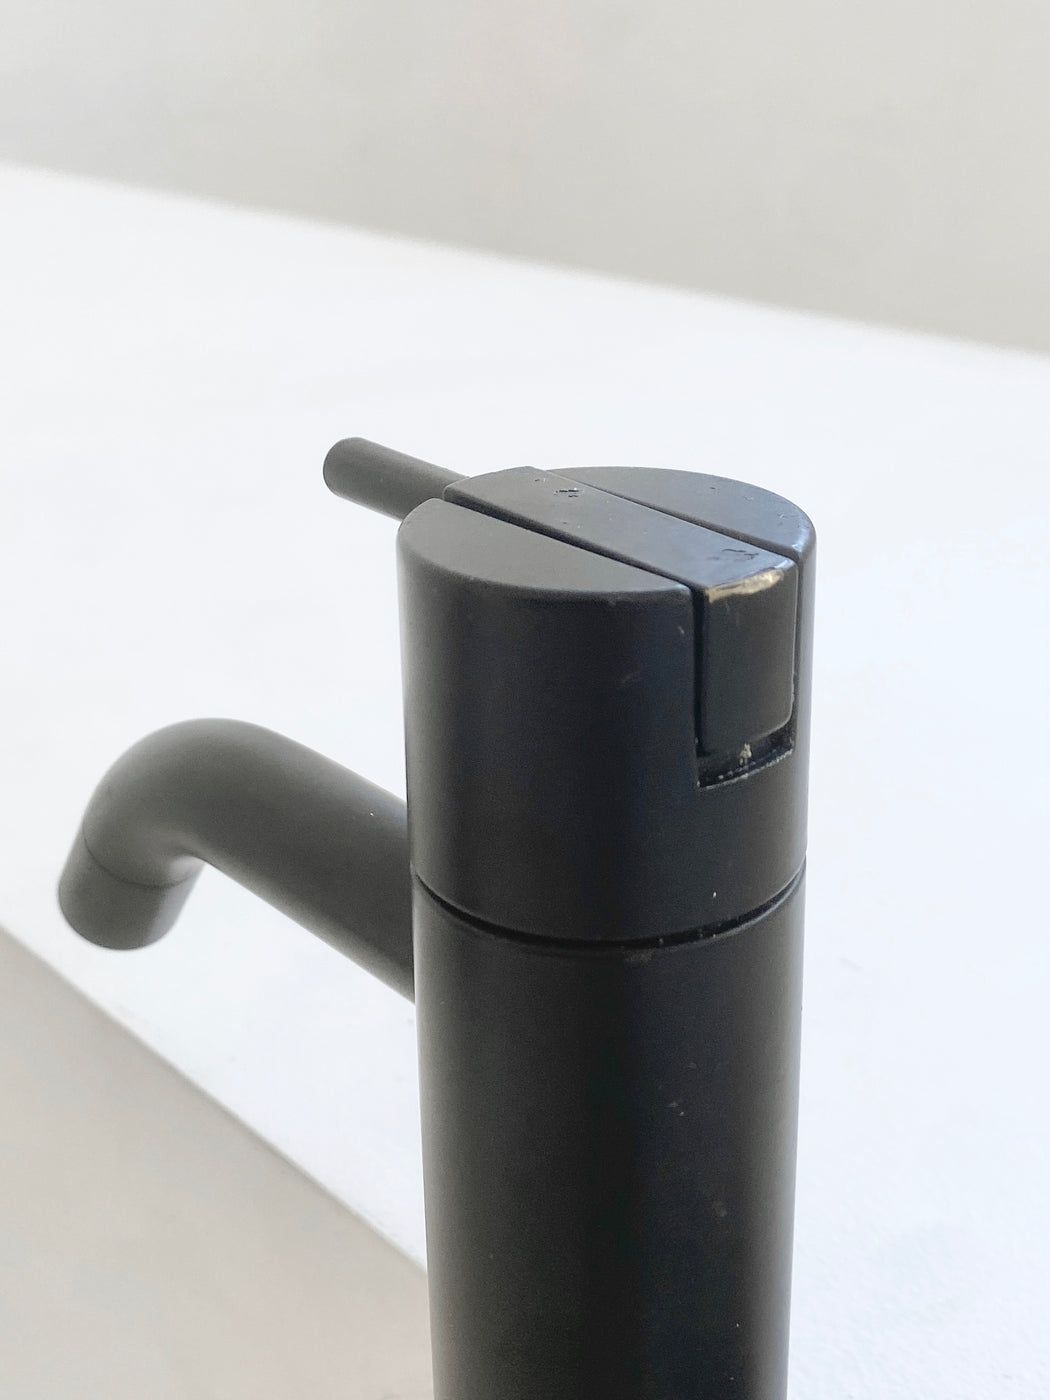 Arne Jacobsen 'HV1' Mixer Tap